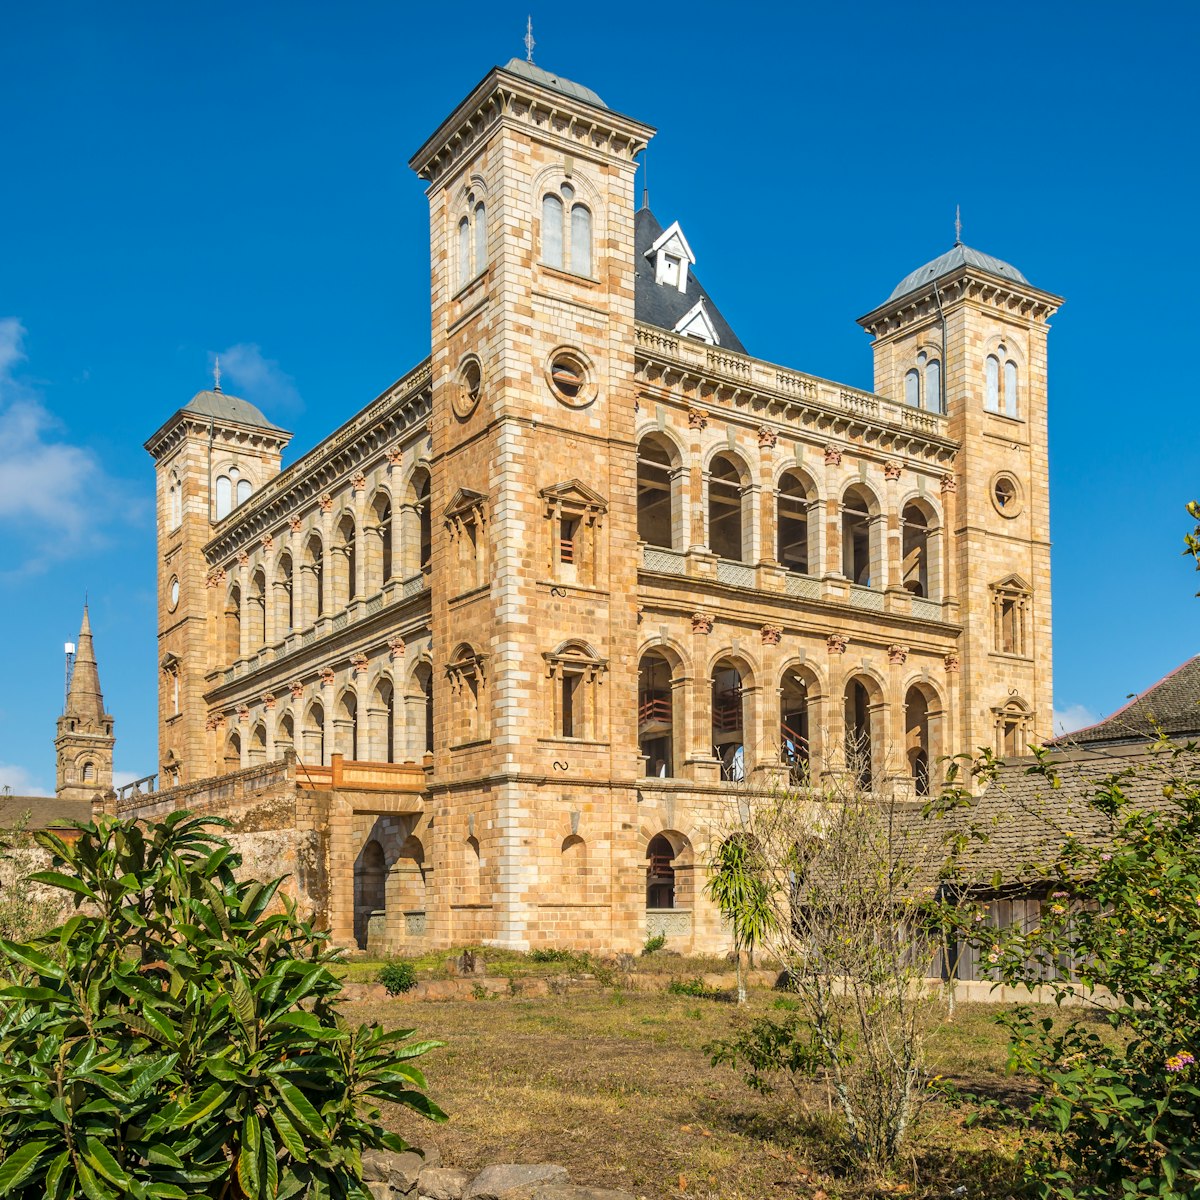 Queen's Palace complex, Rova of Antananarivo
